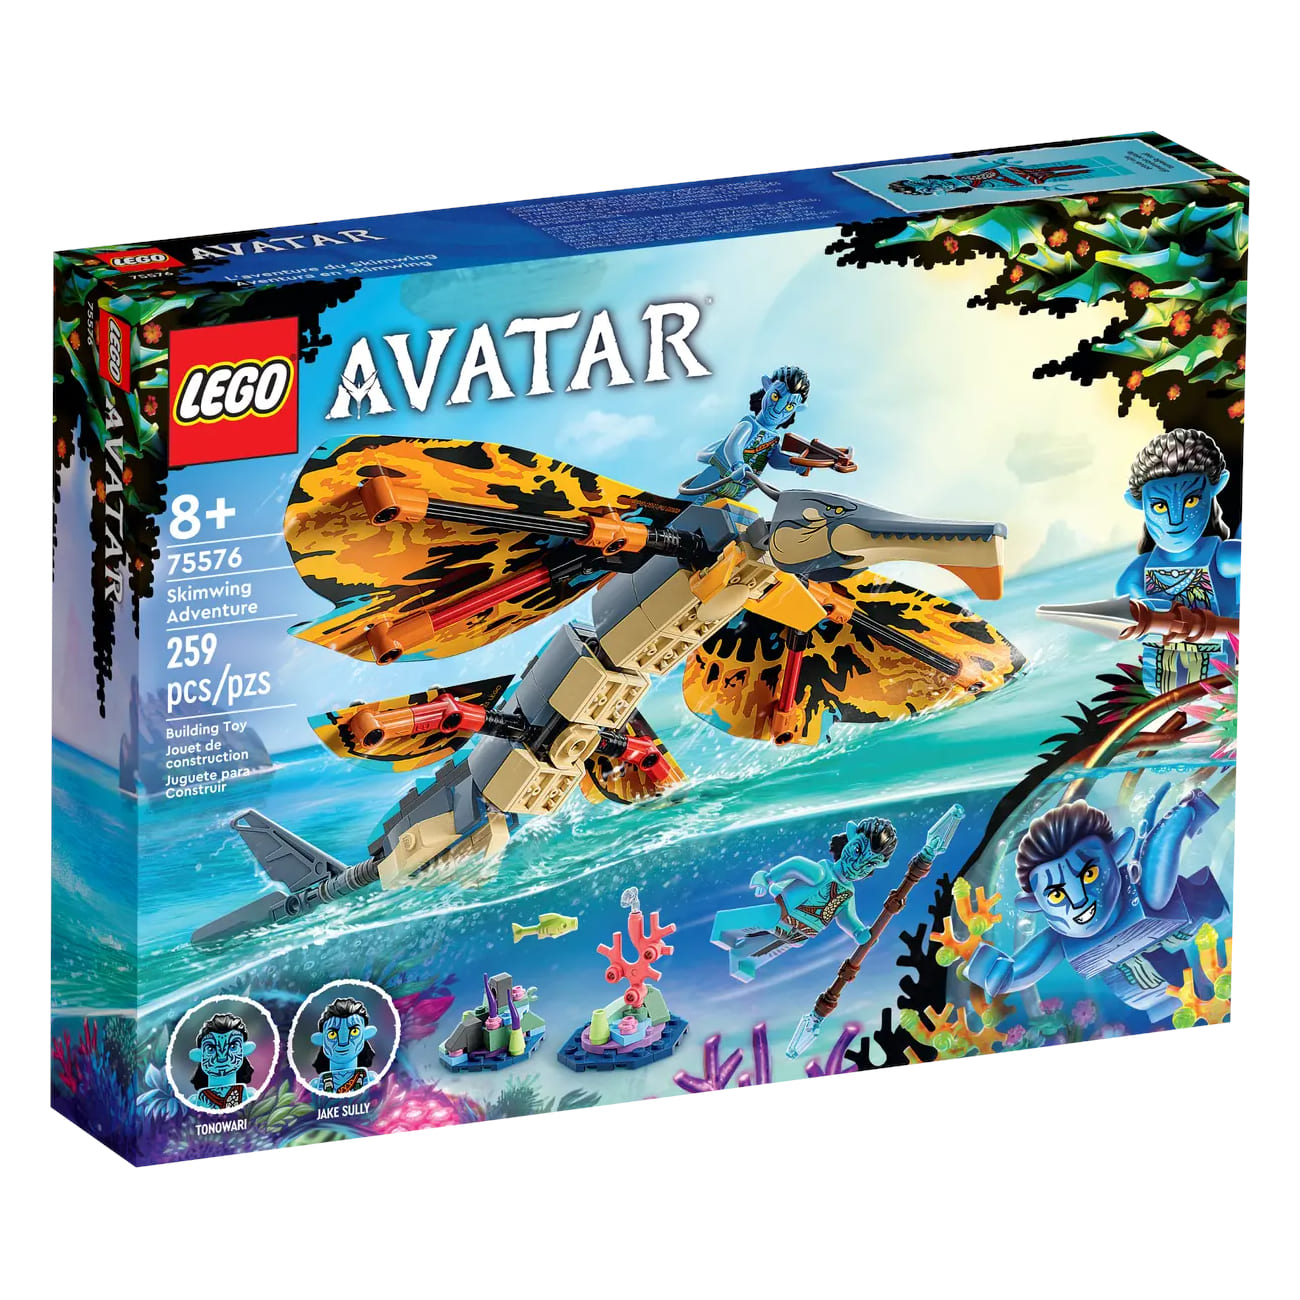 Конструктор LEGO Avatar Skimwing Adventure 75576, 259 деталей конструктор lego avatar skimwing adventure 75576 259 деталей